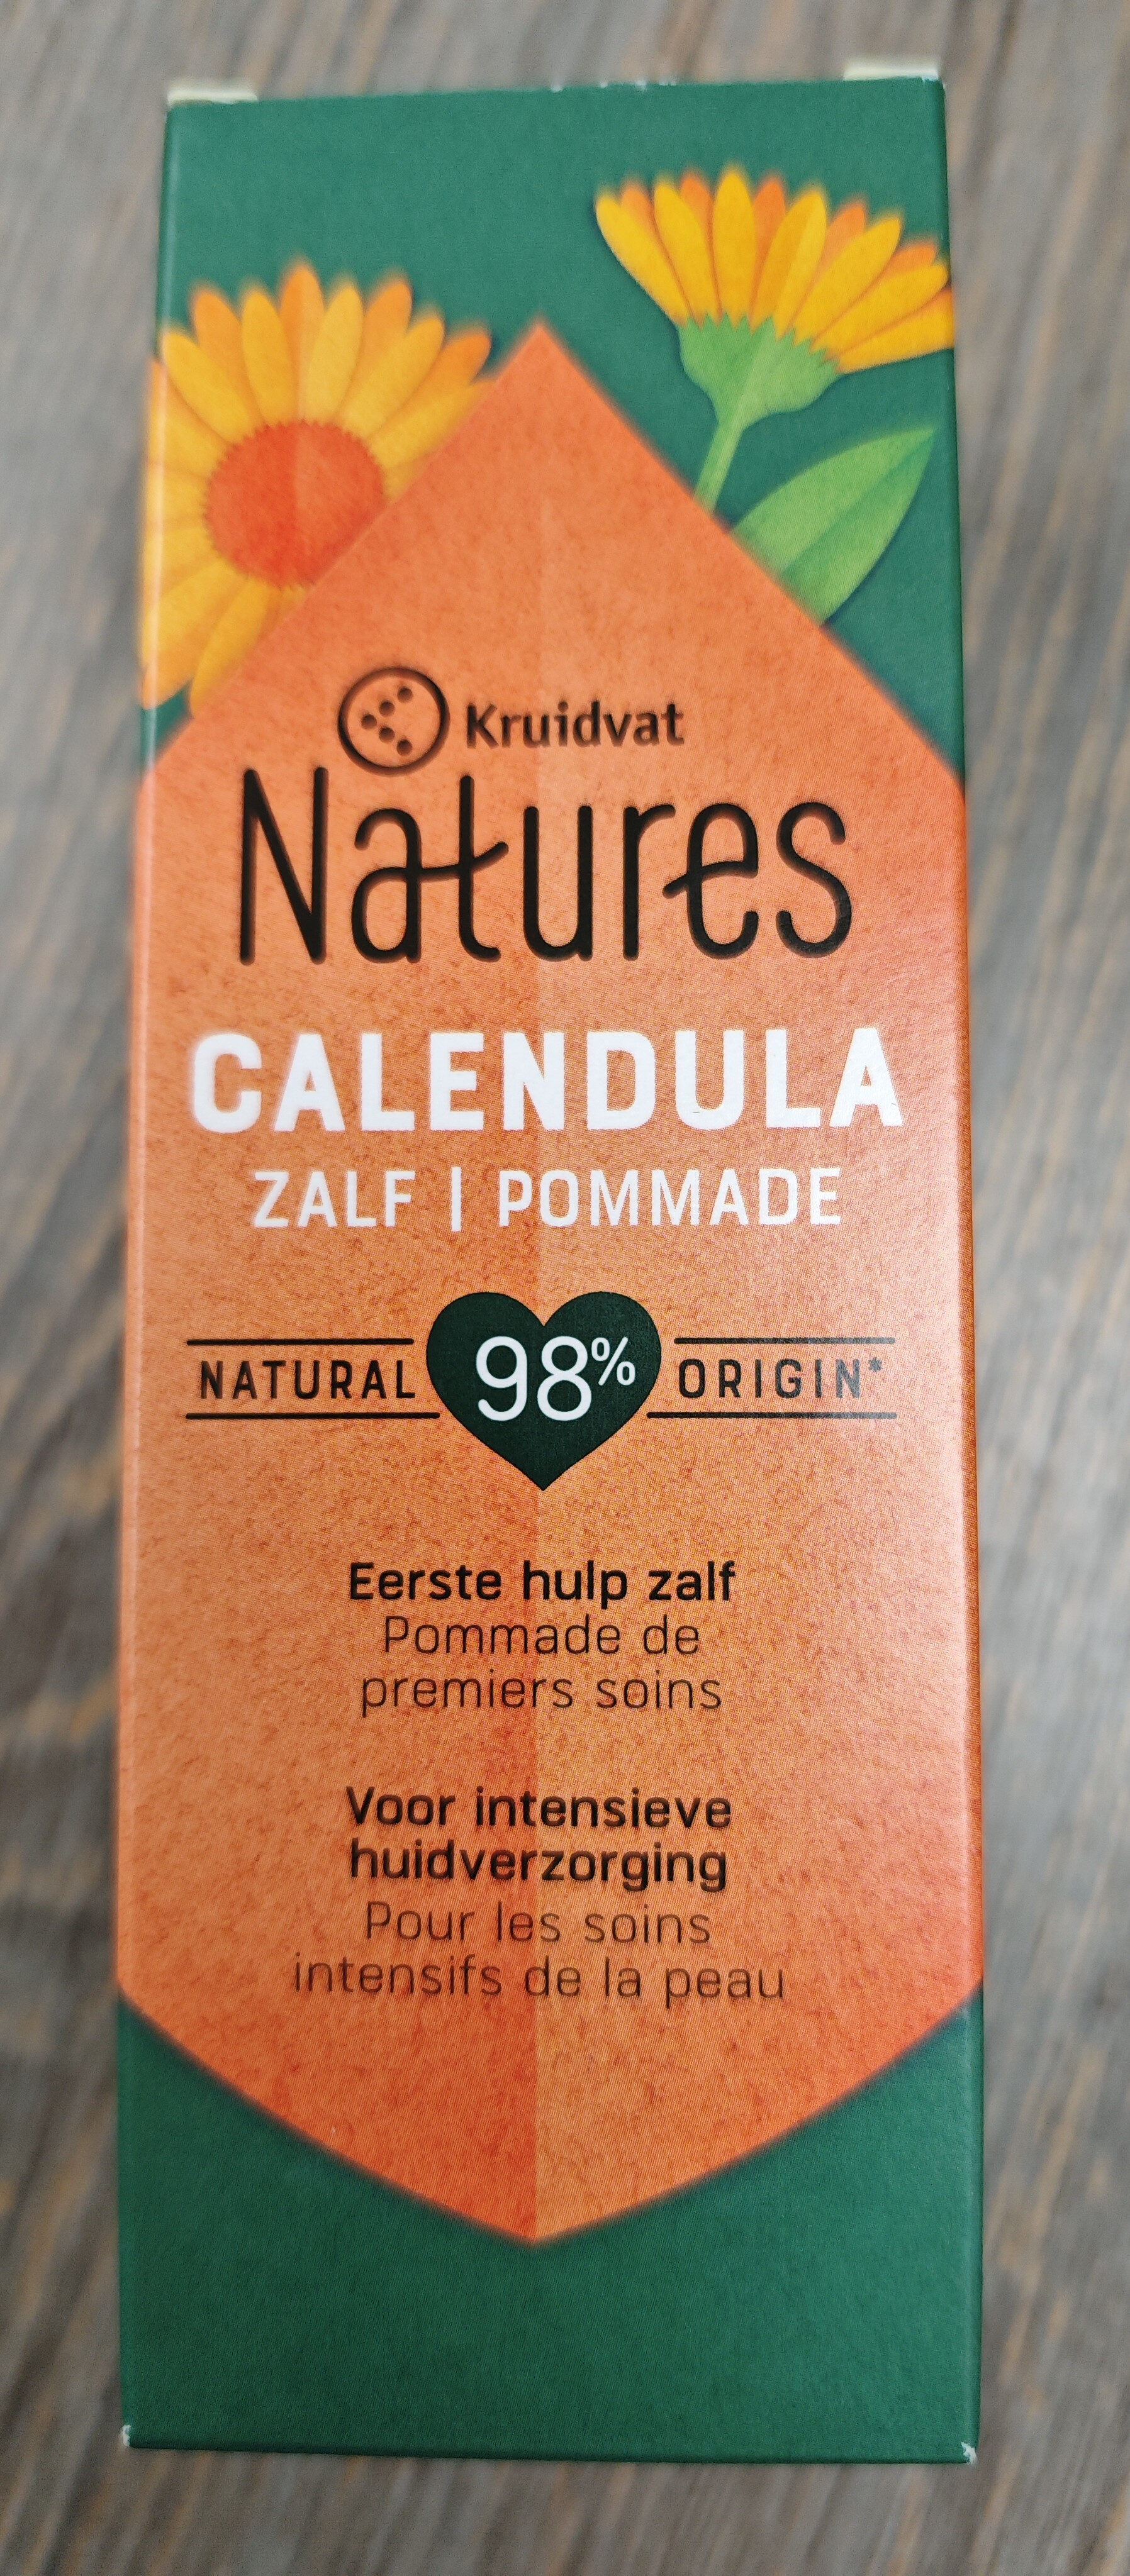 Kruidvat Natures Calendula - Produkt - fr